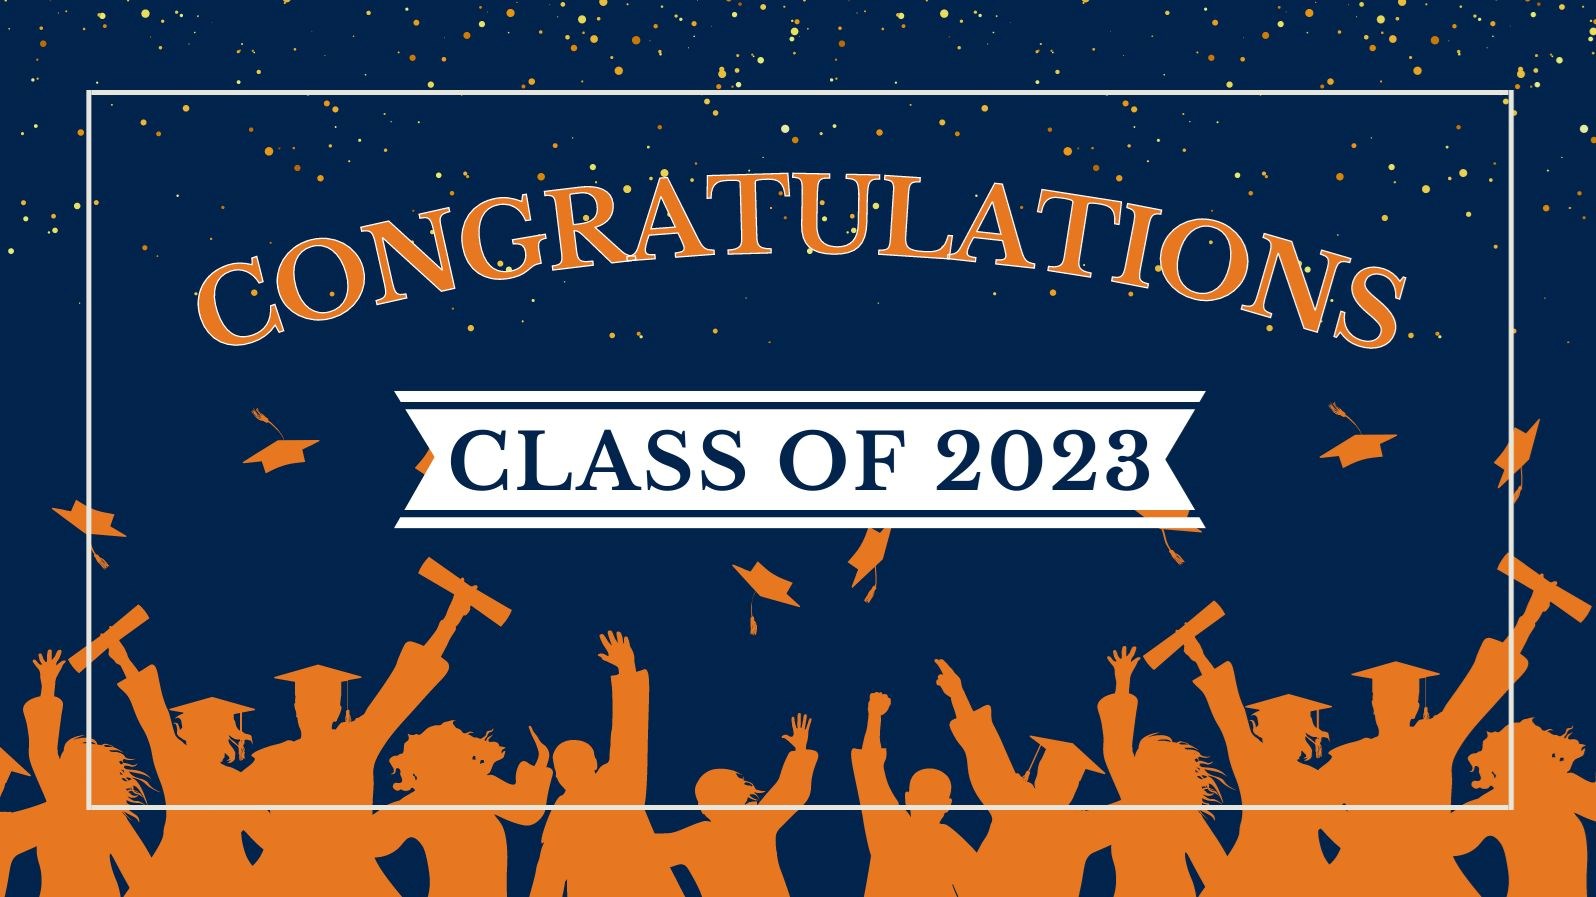 Congratulations, Class of 2023!